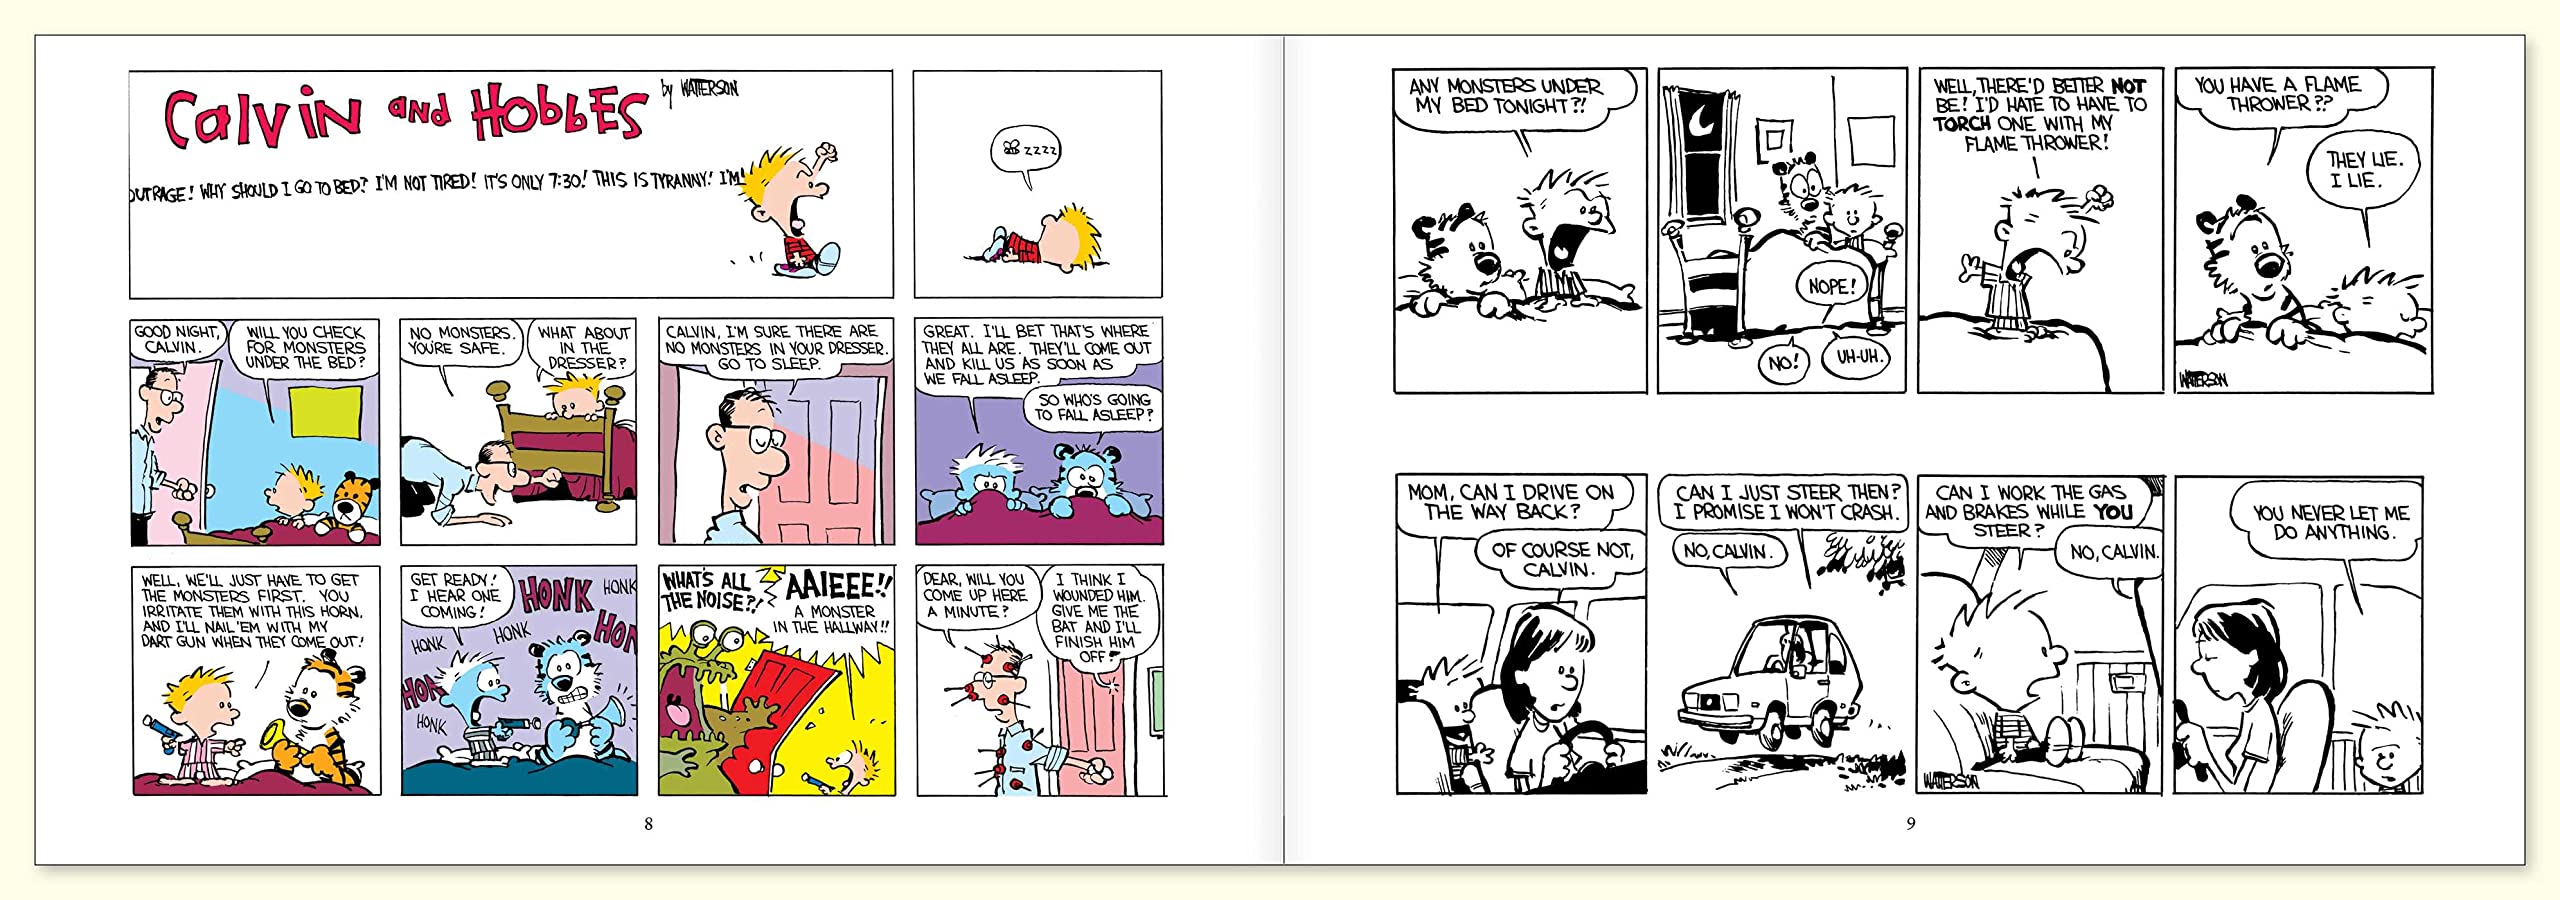 The Calvin and Hobbes Portable Compendium Set 1 (Volume 1)